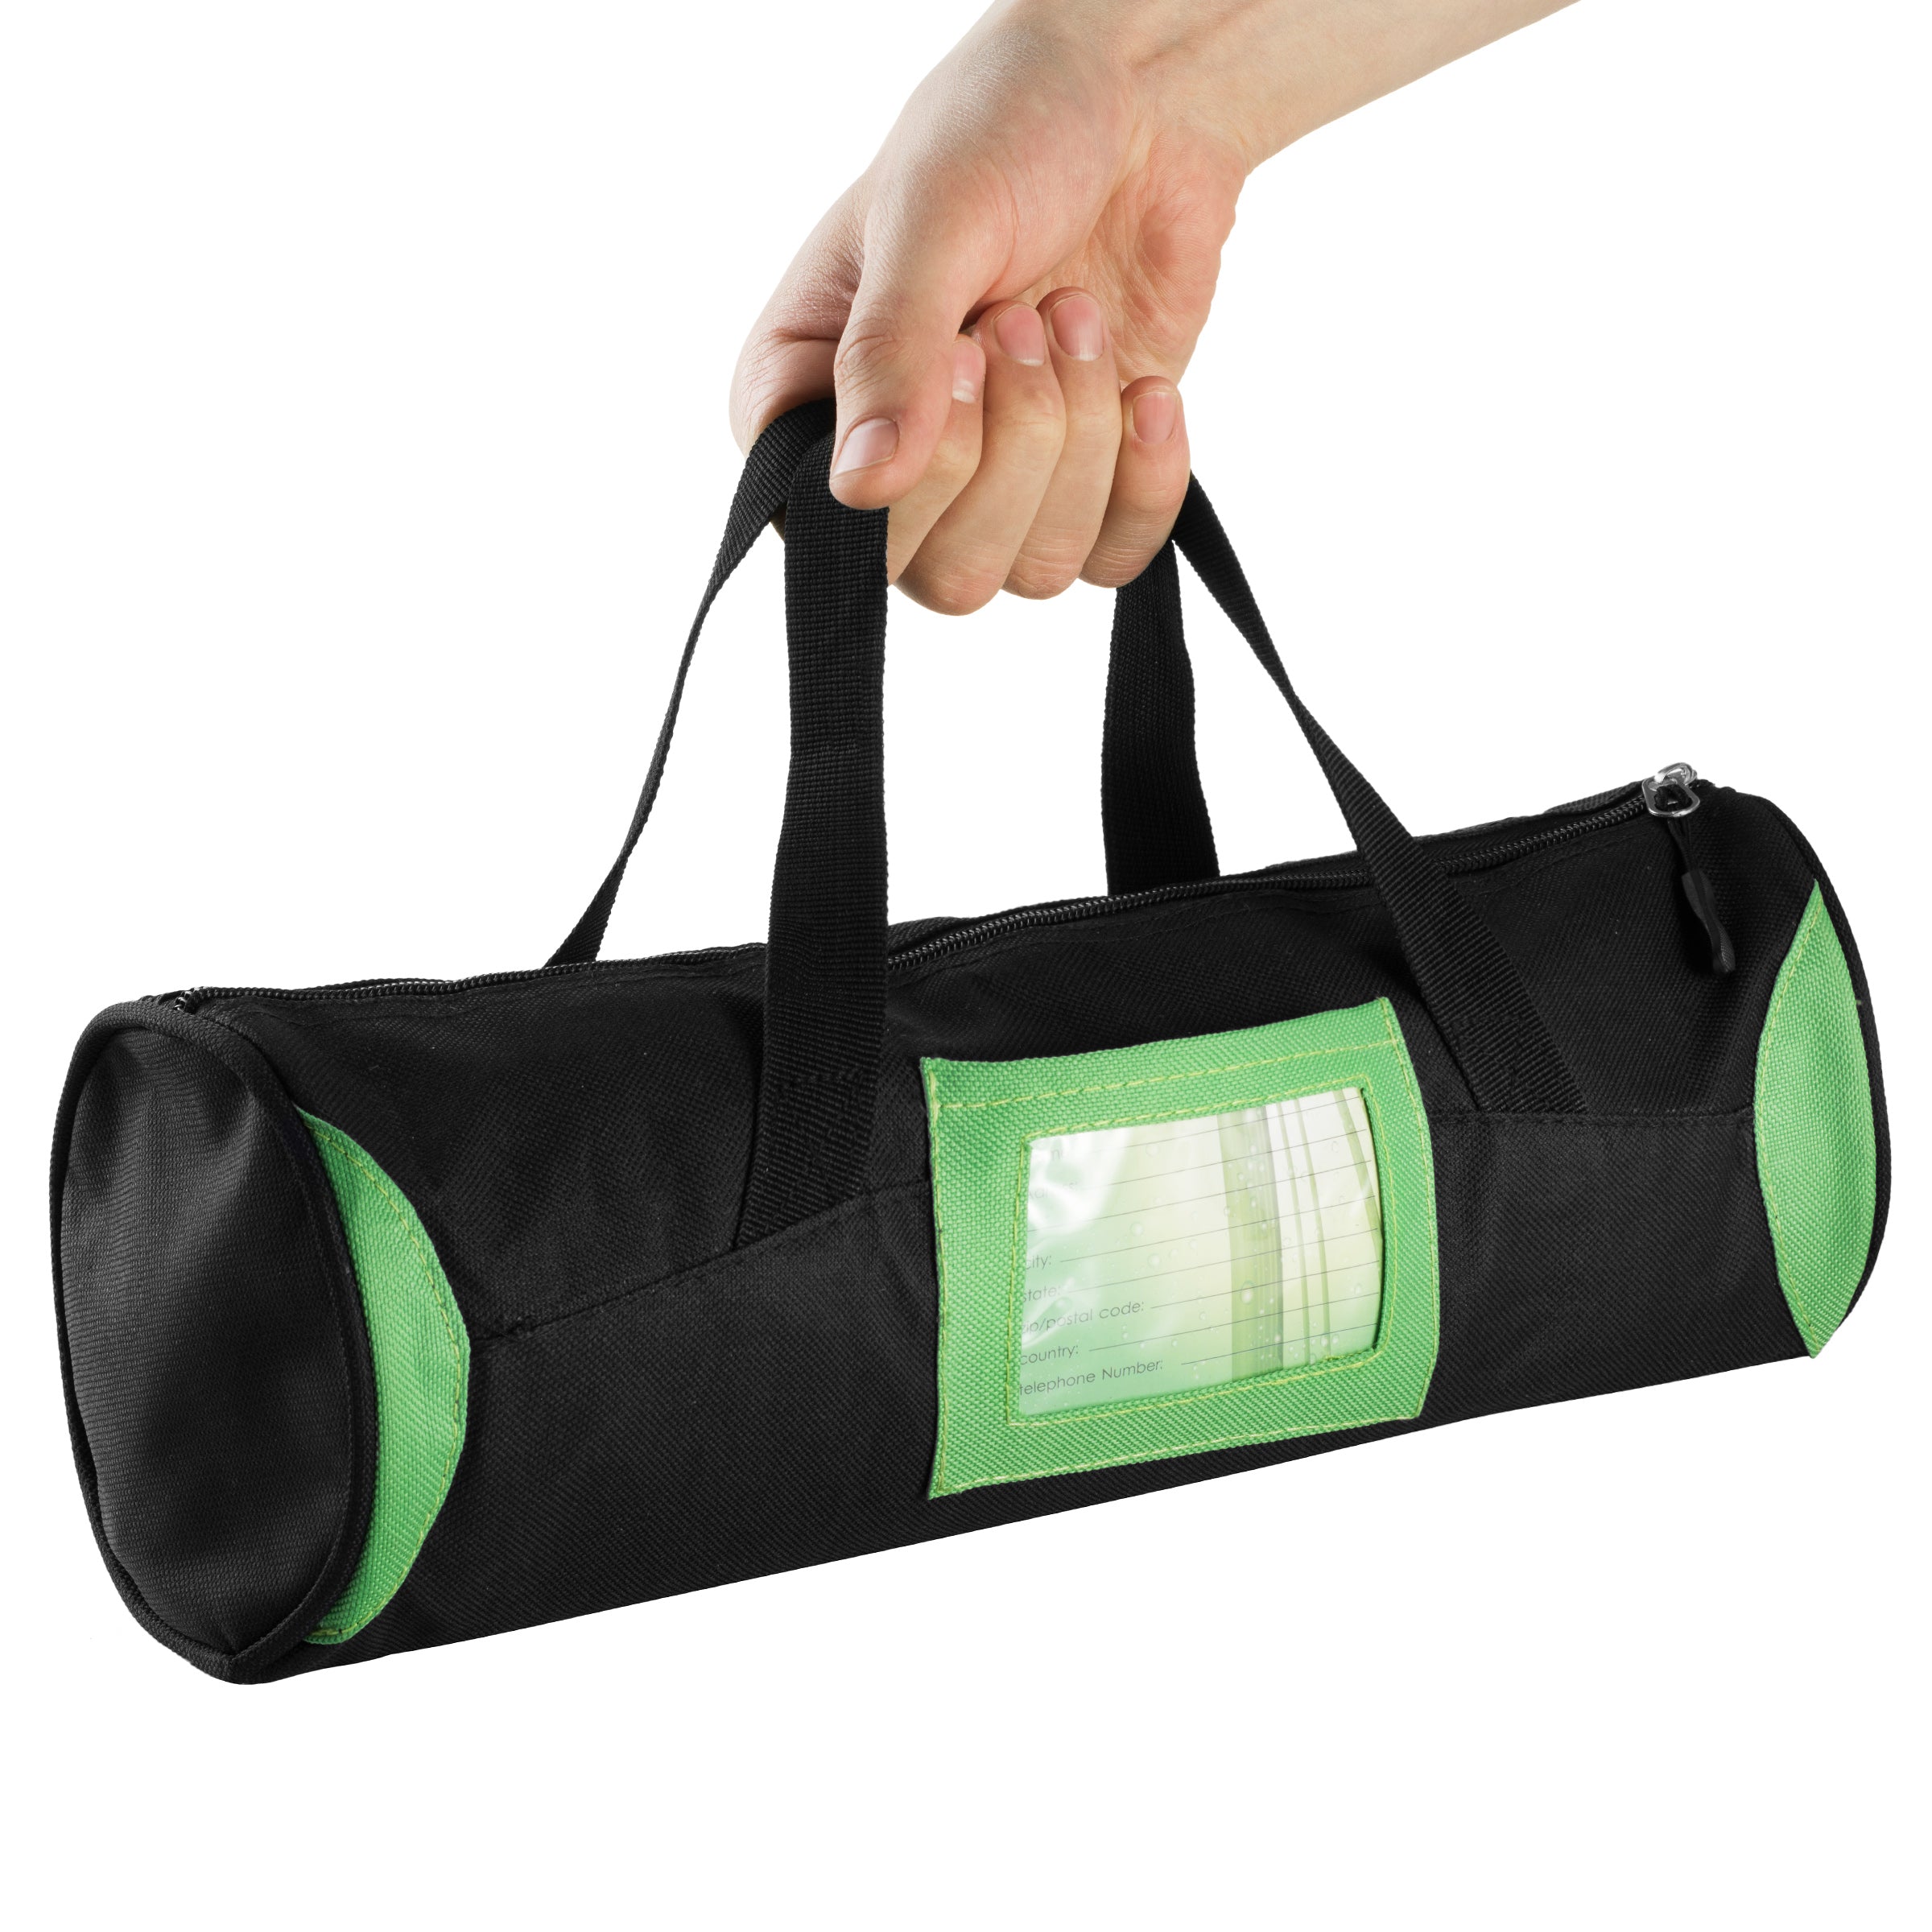 INSMEER Large Cooler Bag 90 Cans/55L Portable Leakproof Lunch Cooler for  Camping